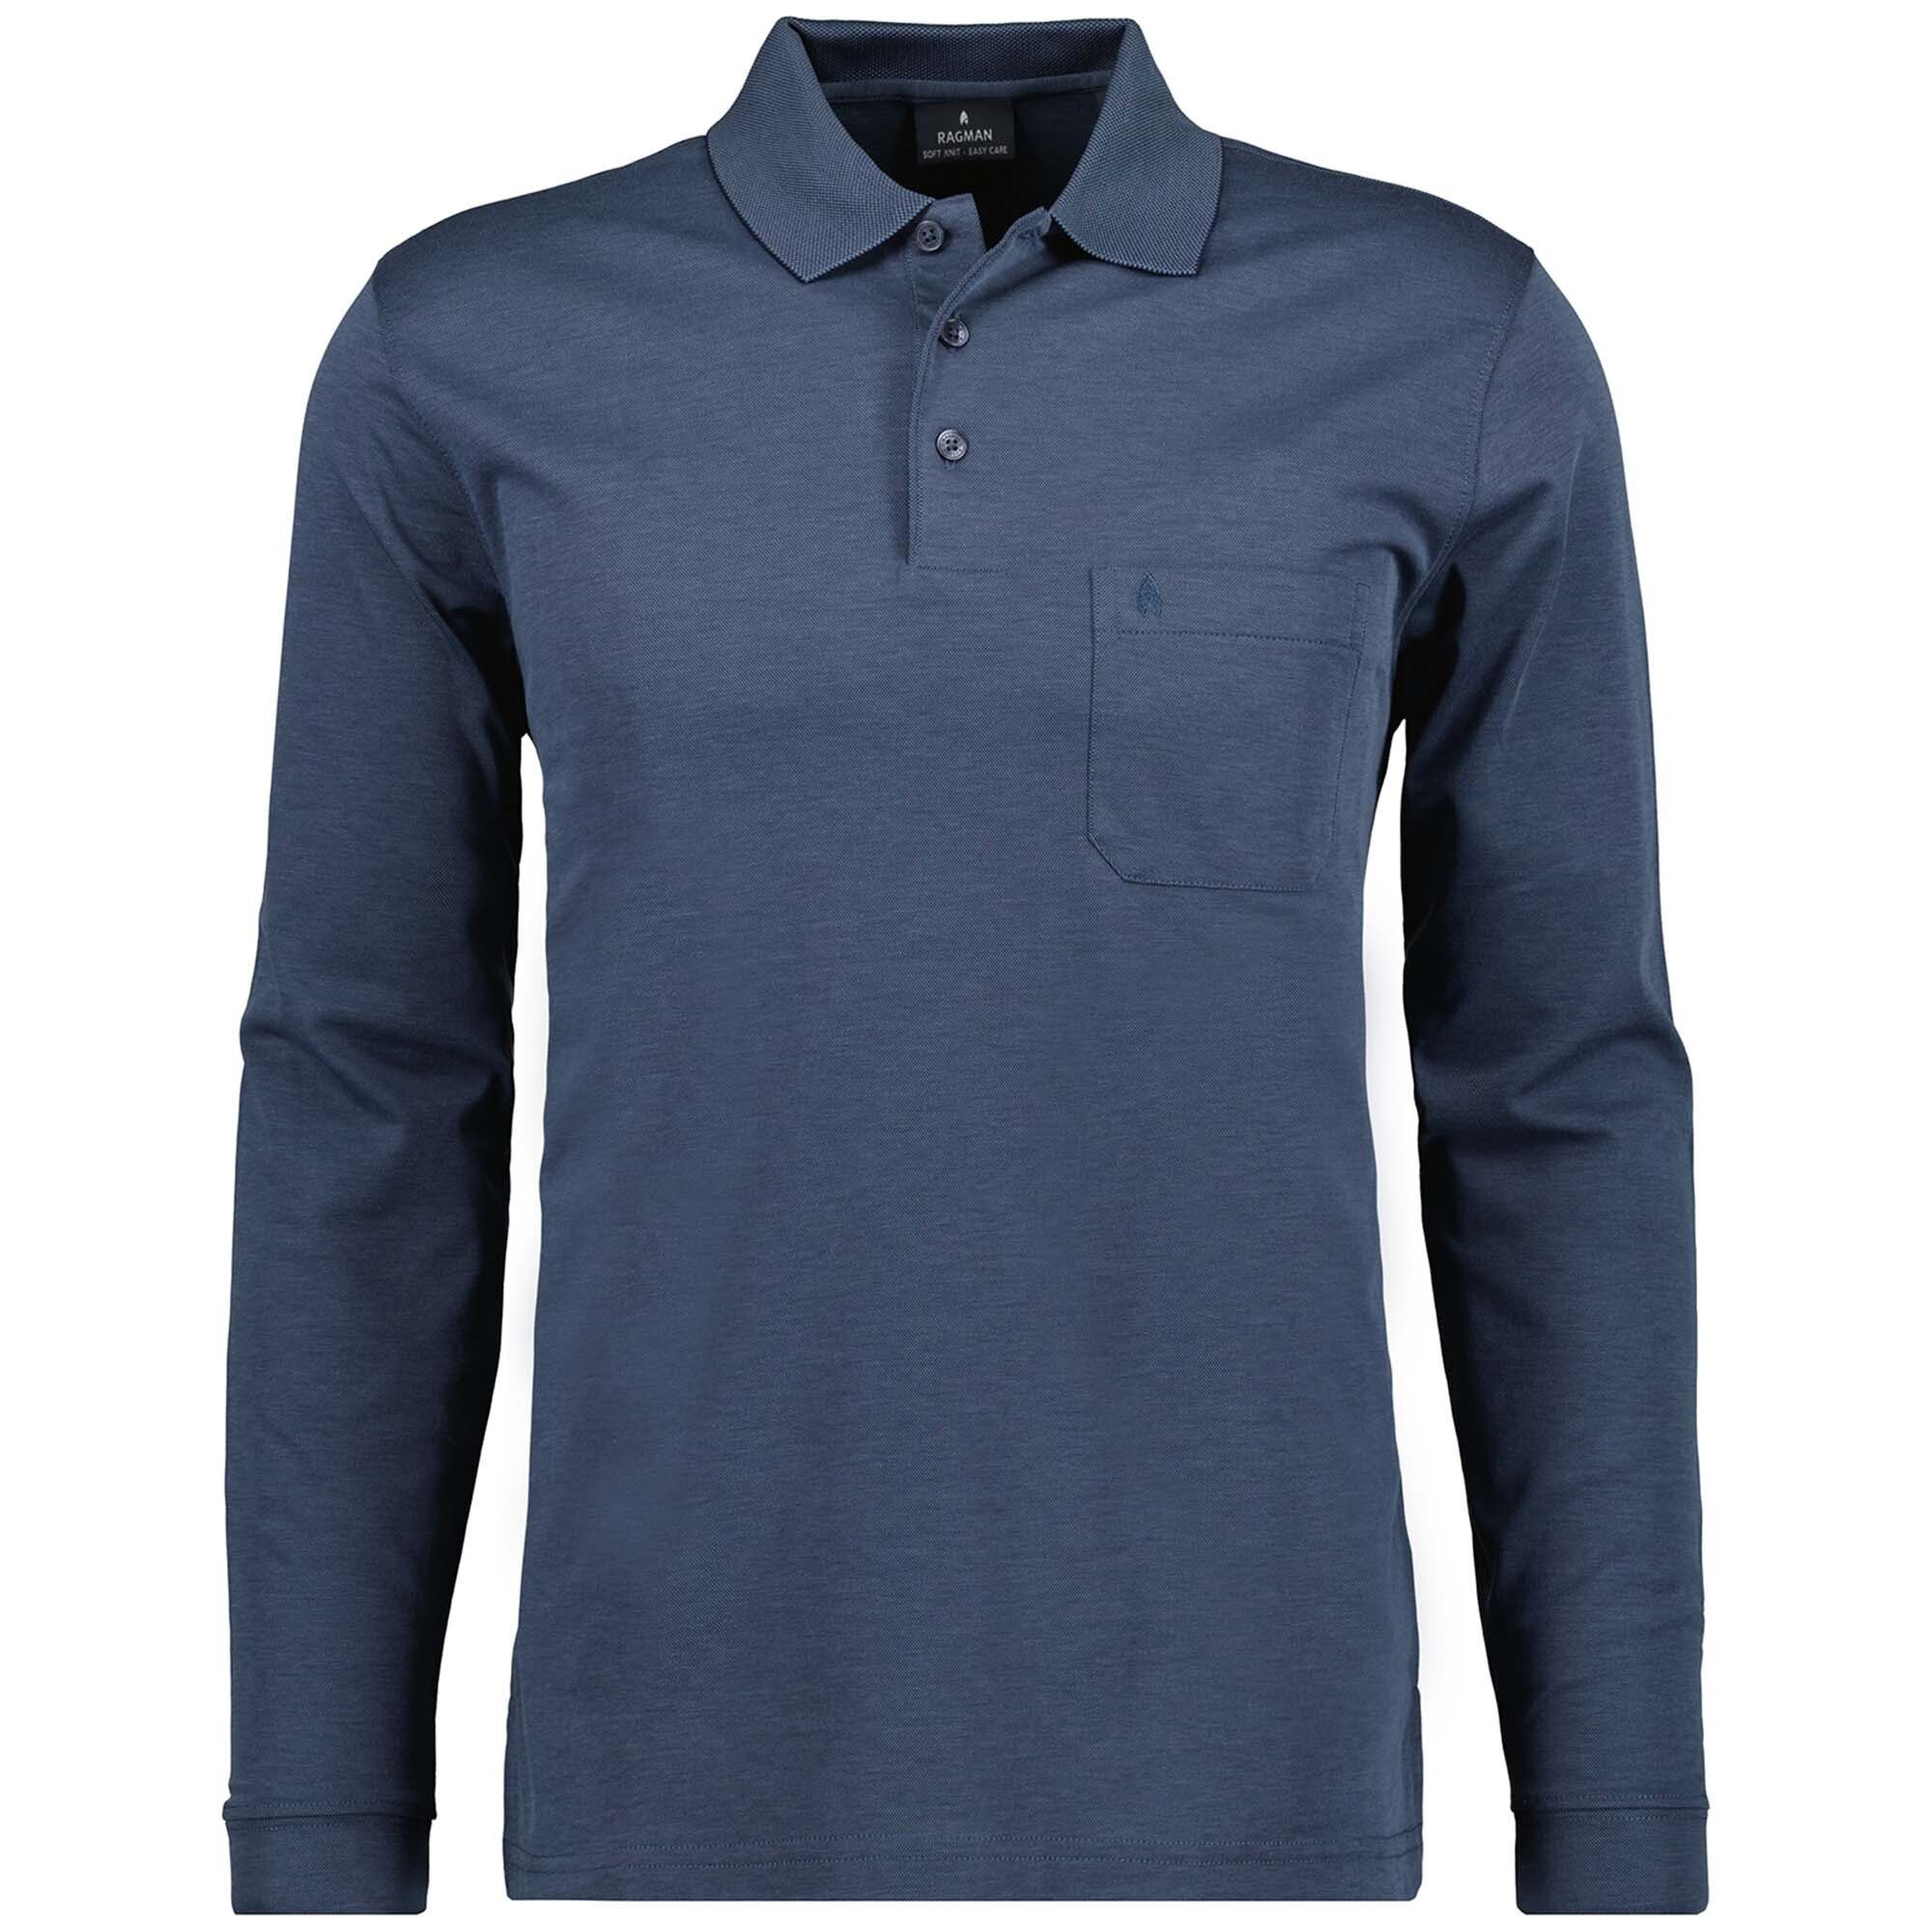 RAGMAN Poloshirt Herren Langarm-Poloshirt Blau Polo Knit - Knopf Soft